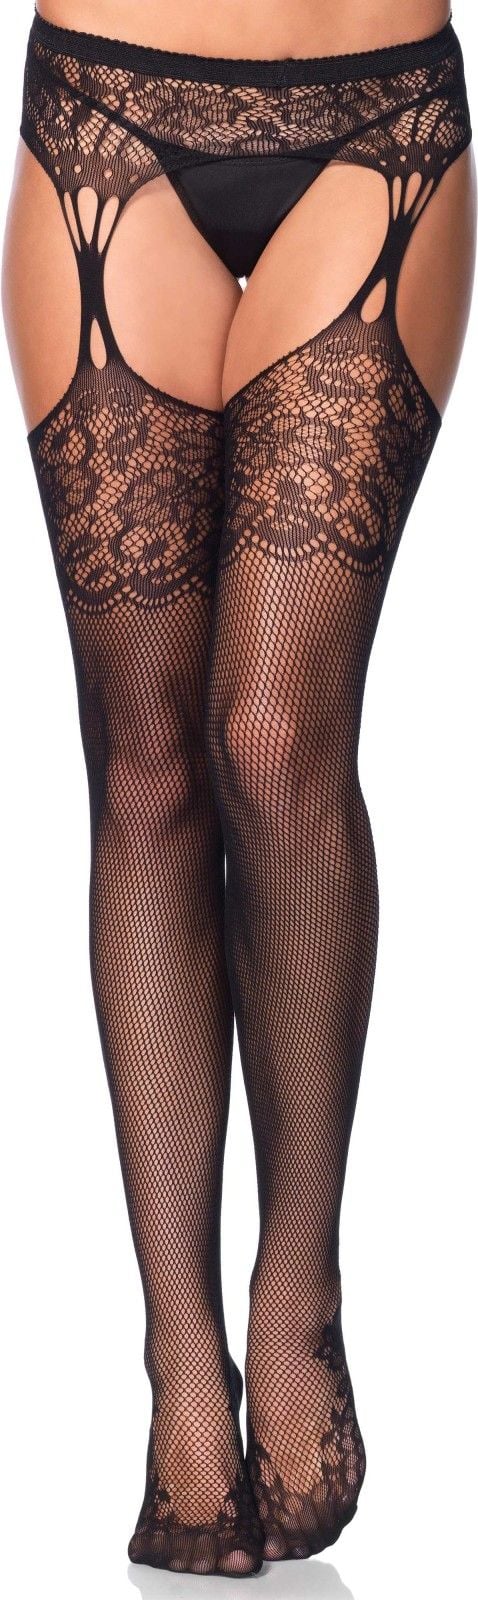 Sexy stockings zwart kant